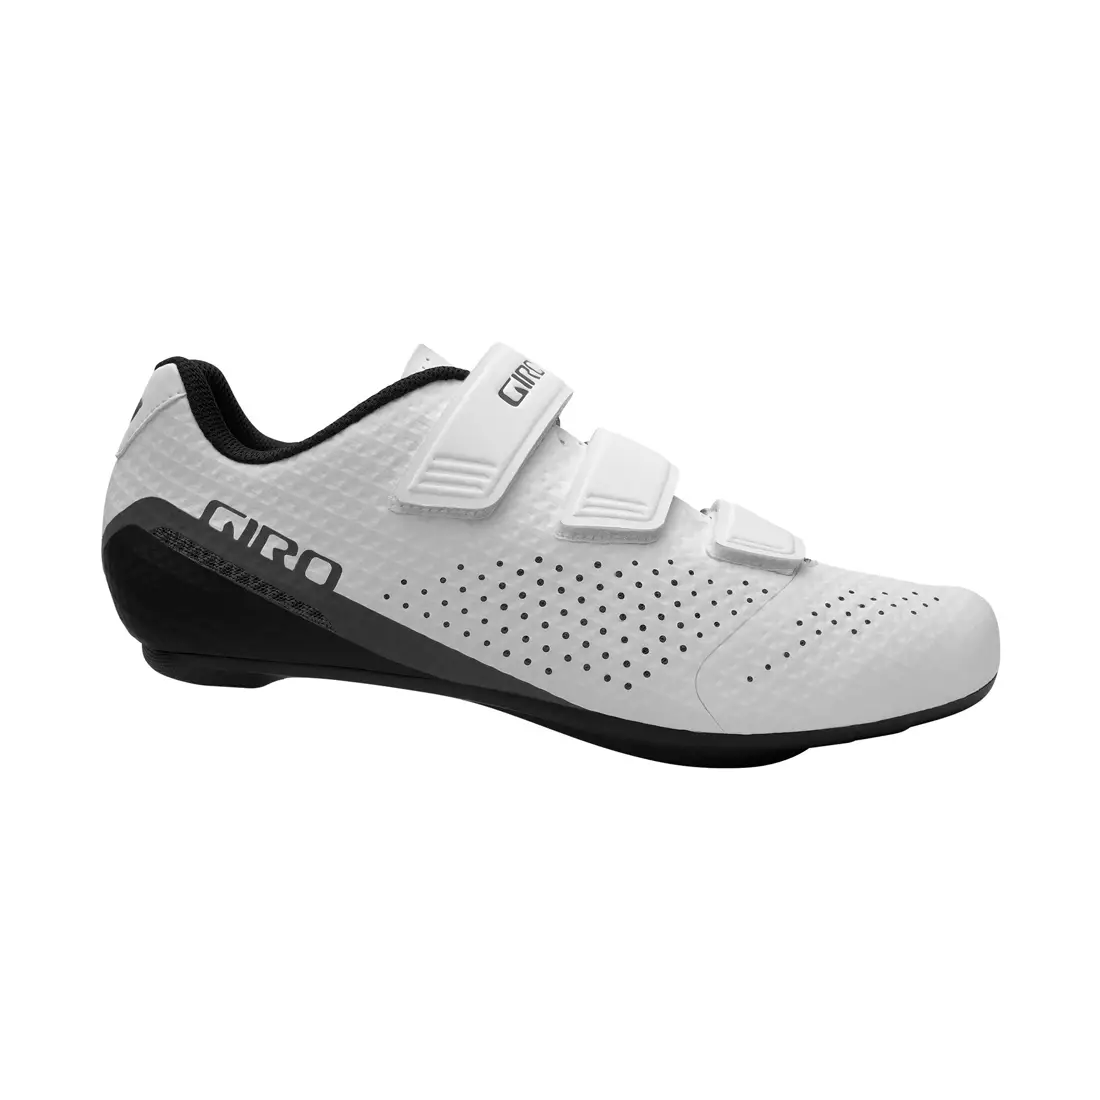 GIRO férfi kerékpáros cipő STYLUS white GR-7123015